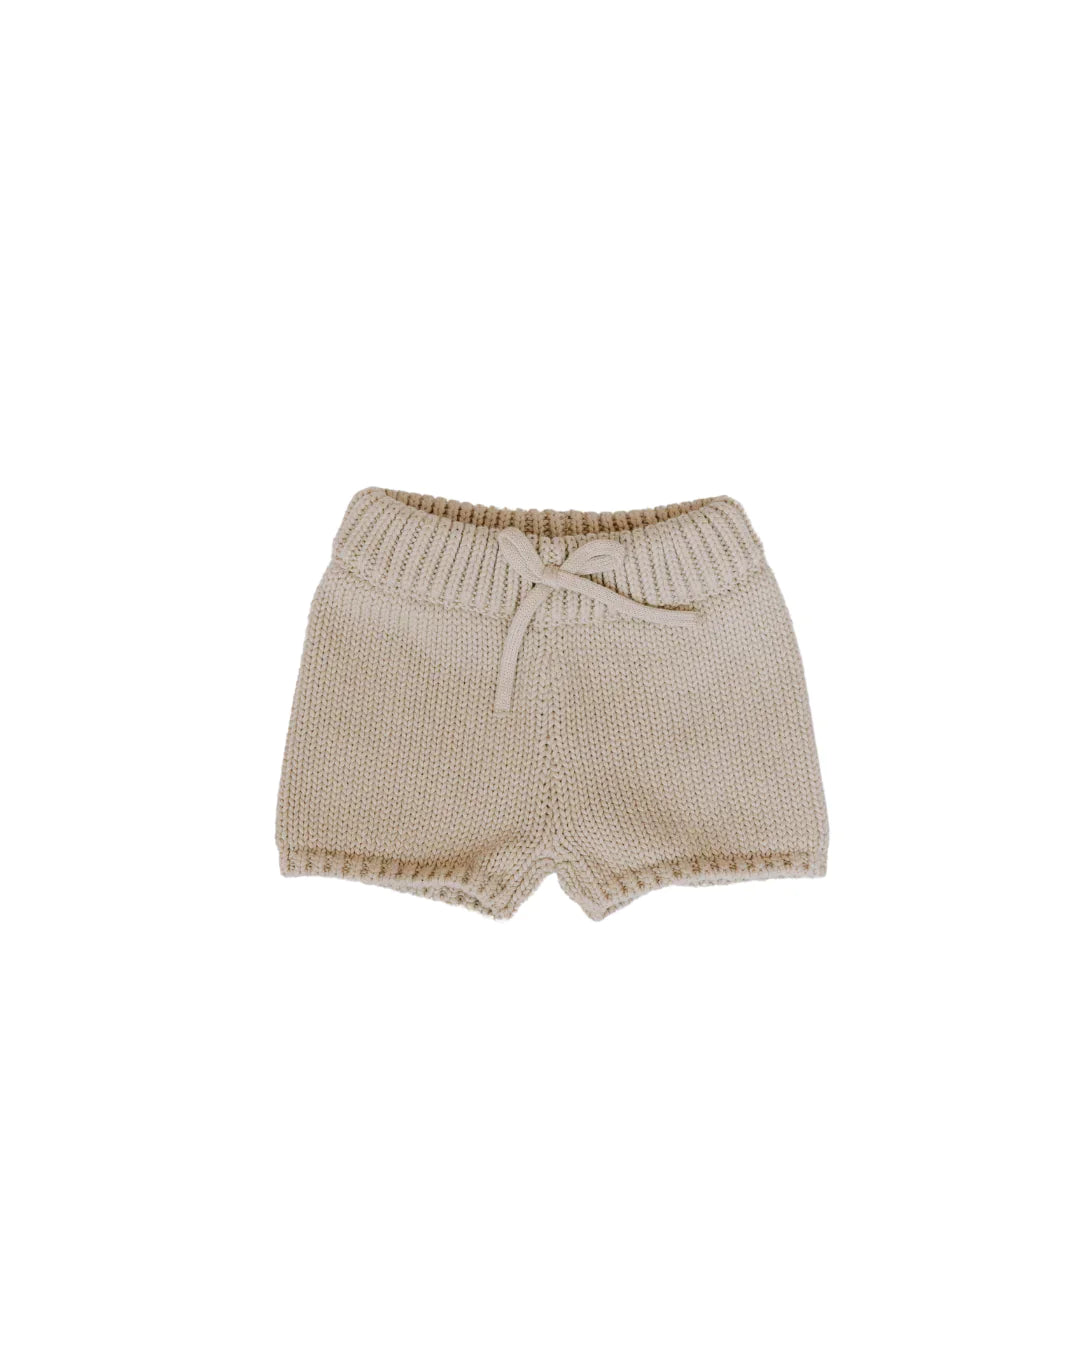 Organic Cotton Knit Shorts - Premium Kids Denim from Dear Hayden - Just $38! Shop now at shopthedenimbar